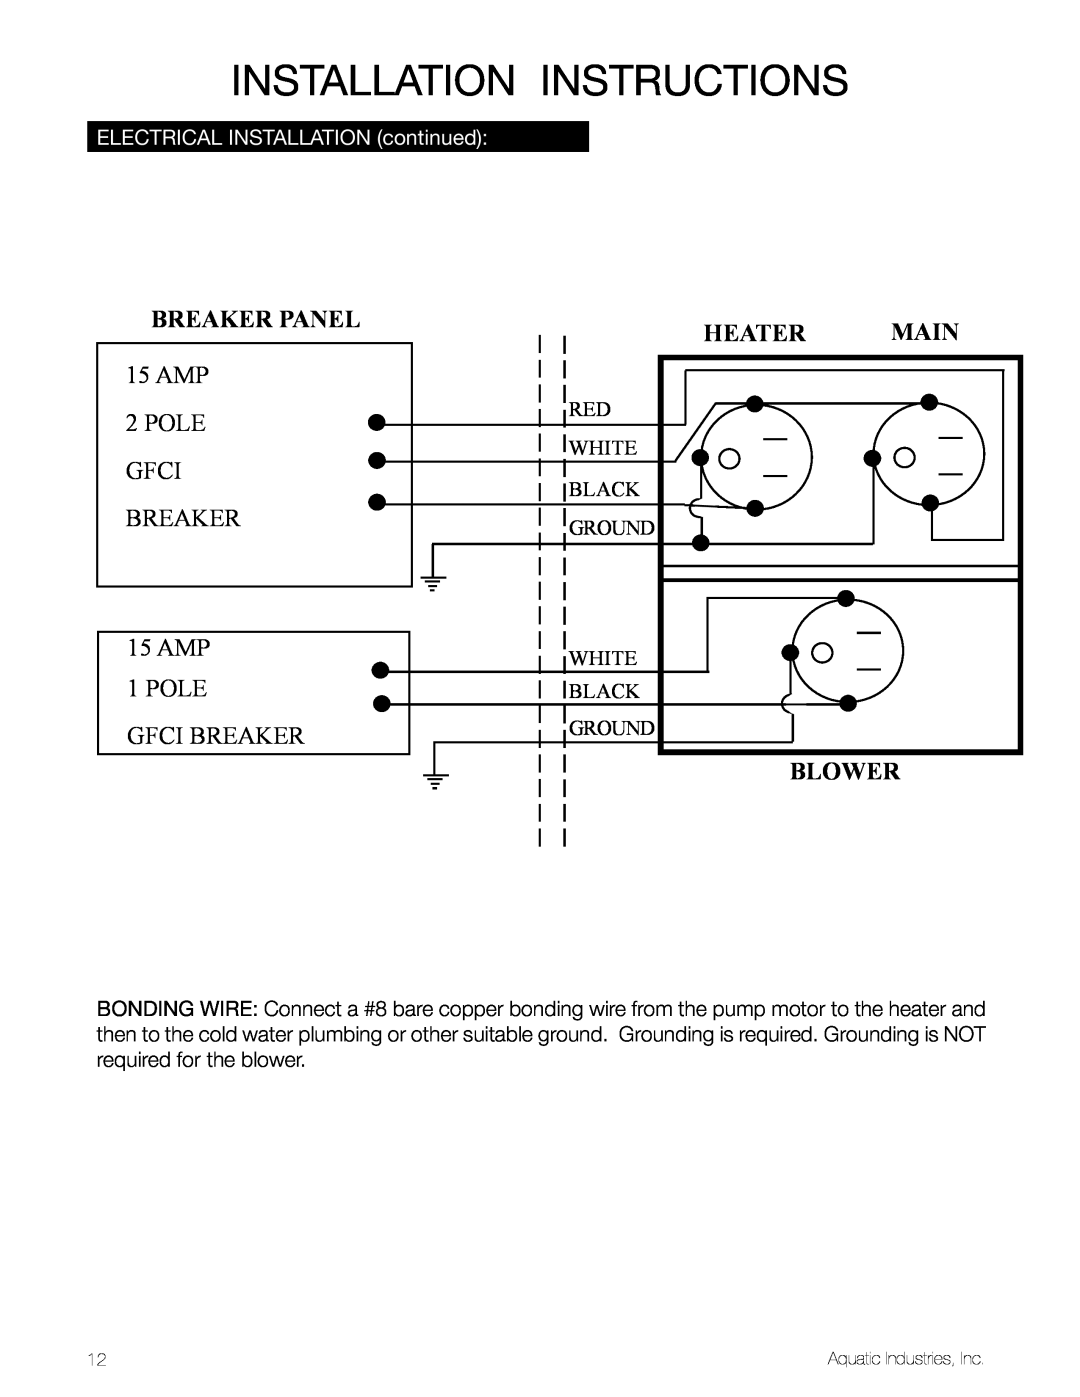 Aquatic LuxeAir Series Installation Instructions, breaker panel, AMP 2 POLE GFCI BREAKER 15AMP 1POLE, Gfci Breaker, Heater 